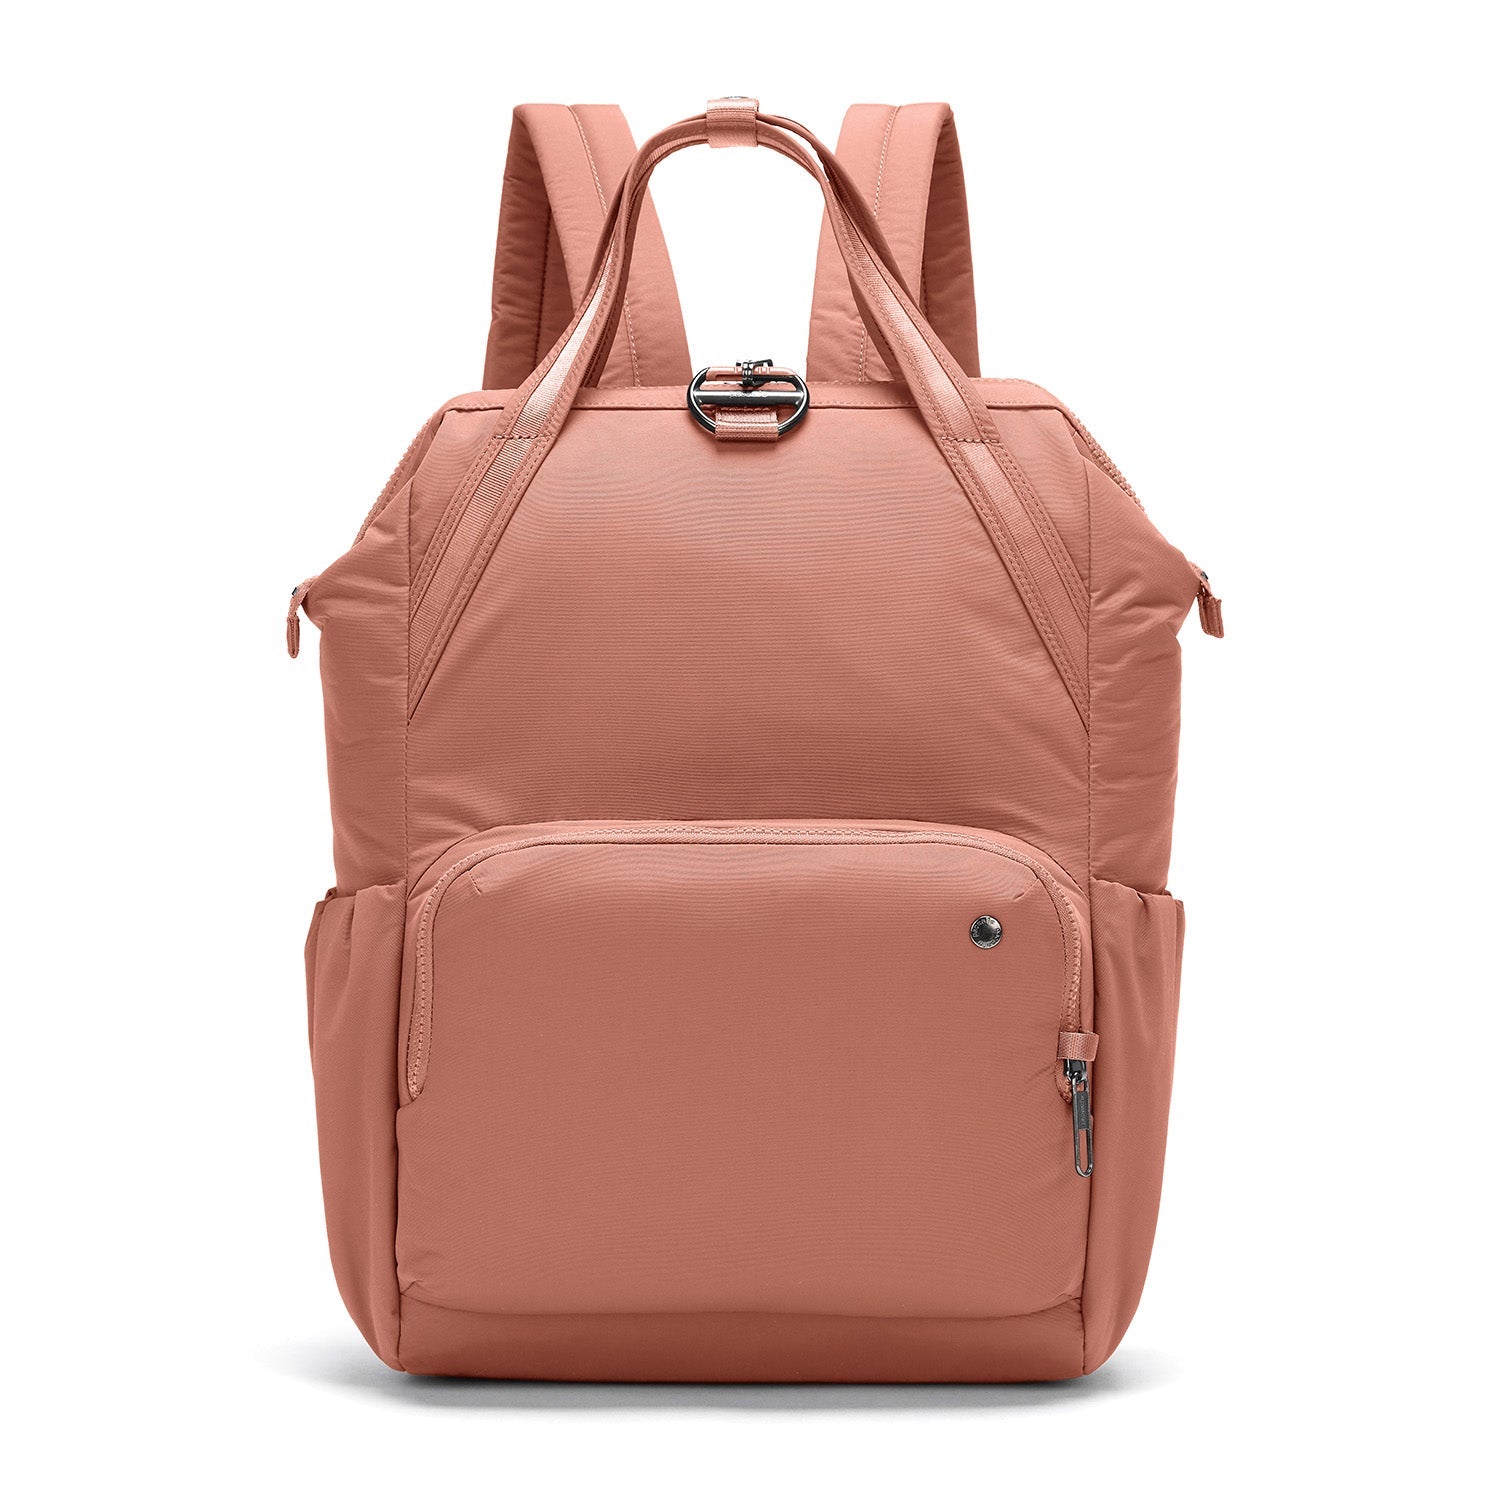 Women's Travel Backpacks - Anti-Theft Everyday Backpacks